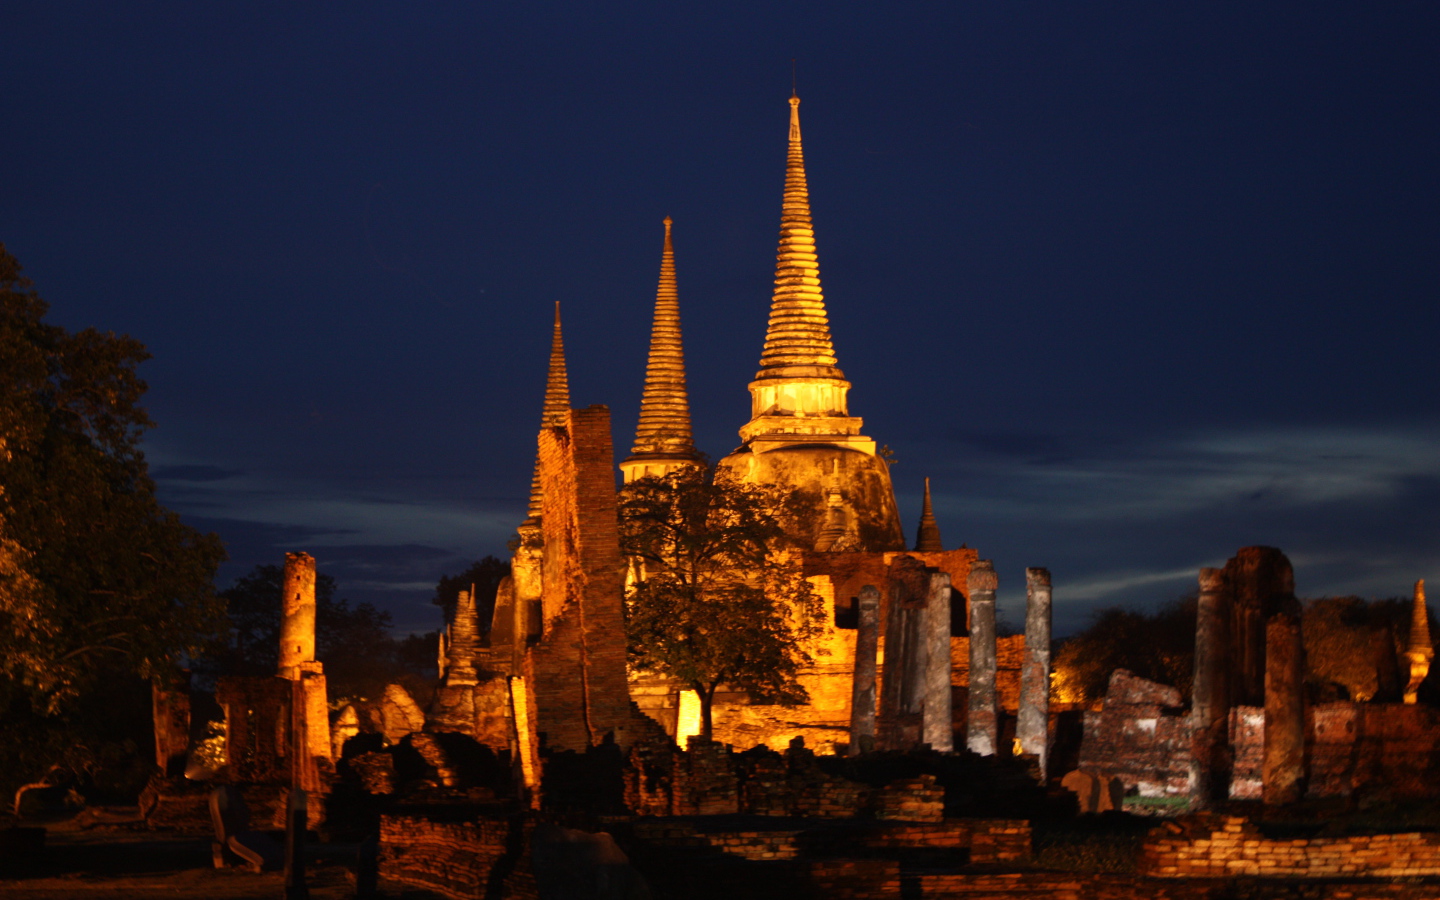 Night illumination of the temple at the resort Ayuthaya, Thailand